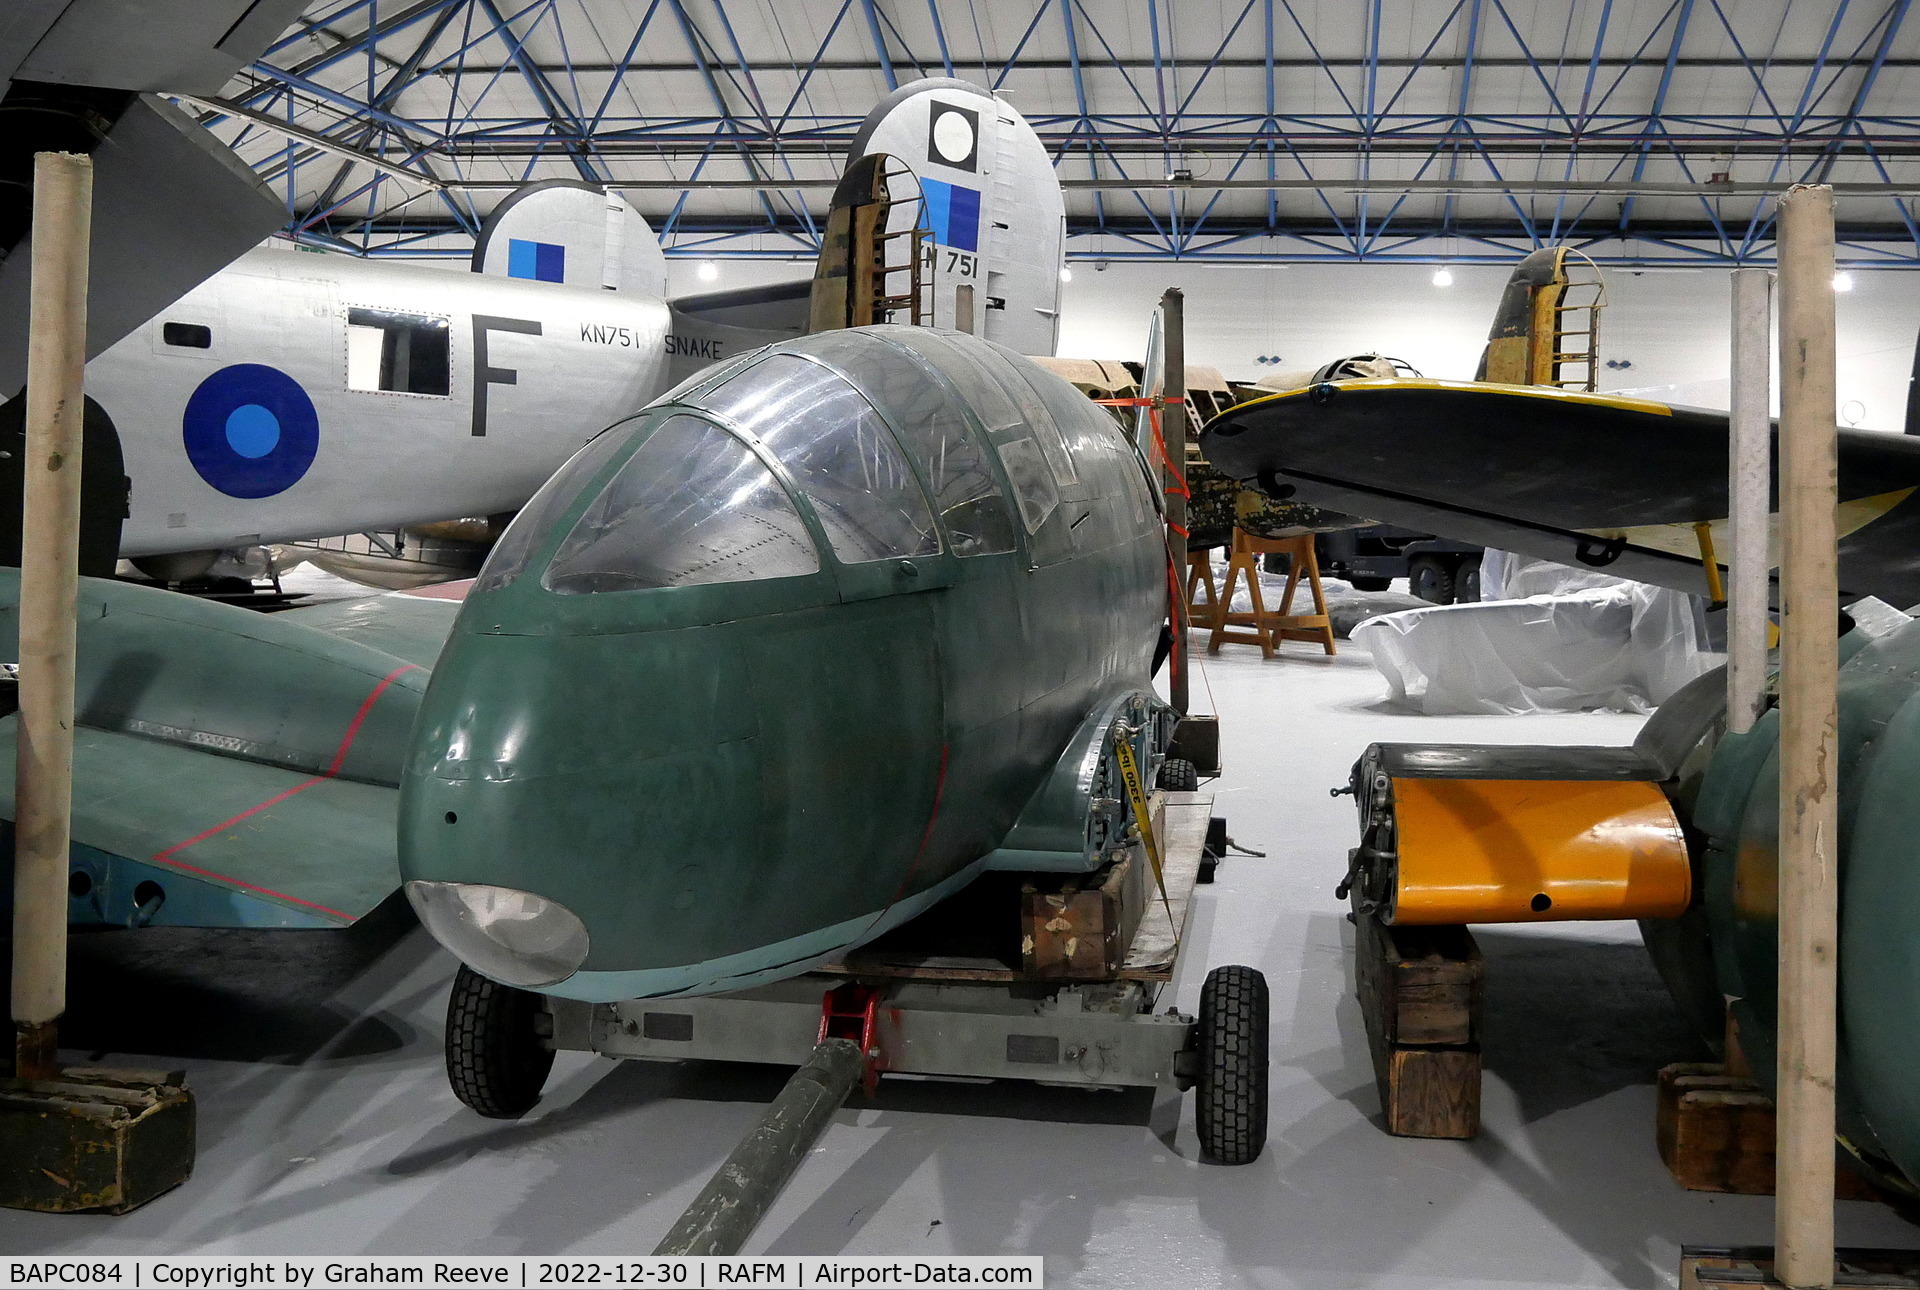 BAPC084, 1932 Mitsubishi Ki 46-III Dinah C/N 5439, On display at the RAF Museum, Hendon.